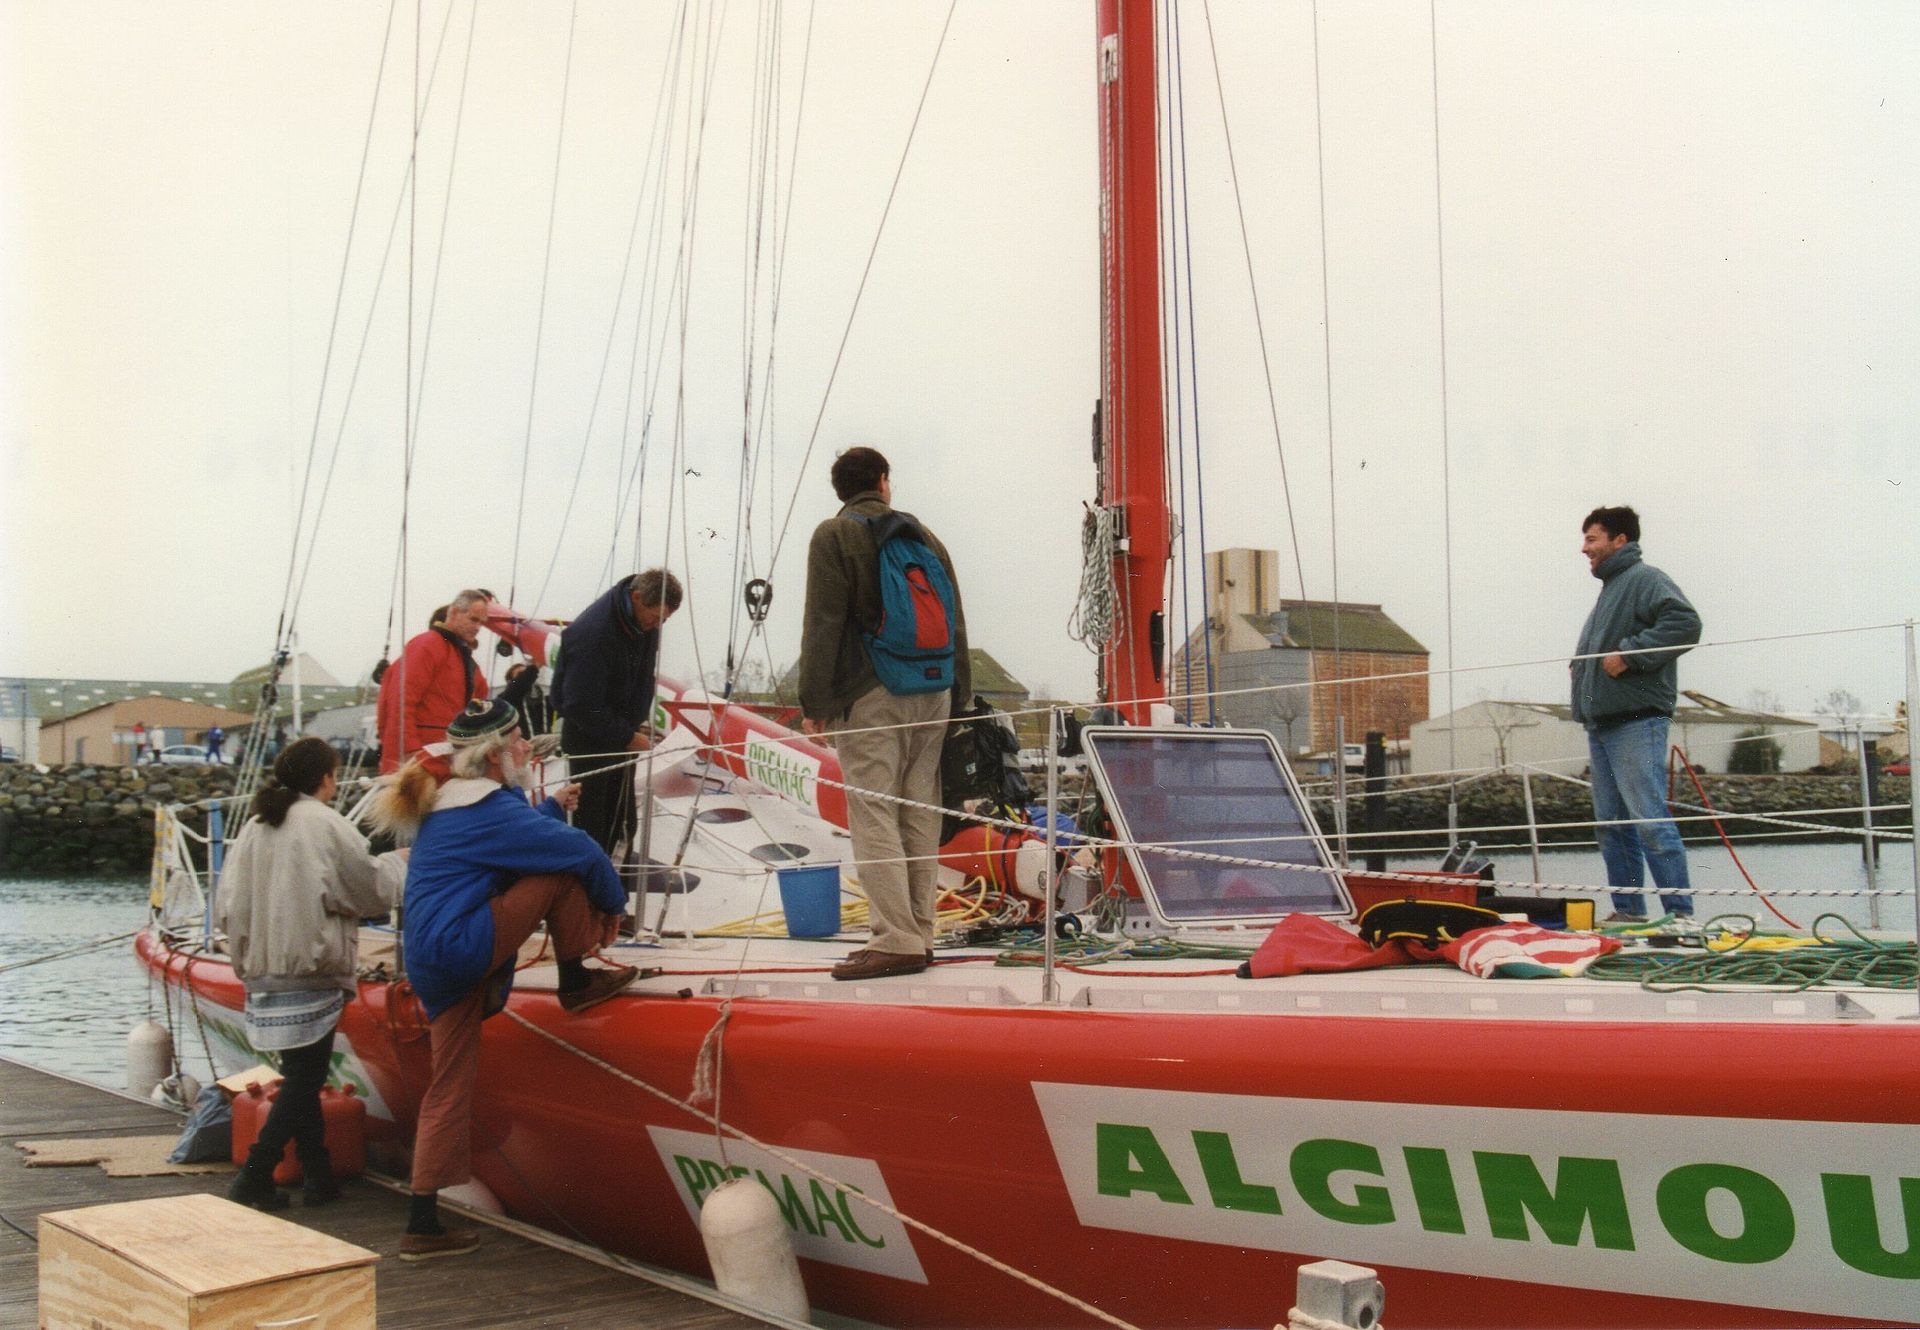 Algimouss_au_départ_du_Vendée_Globe_1996-1997